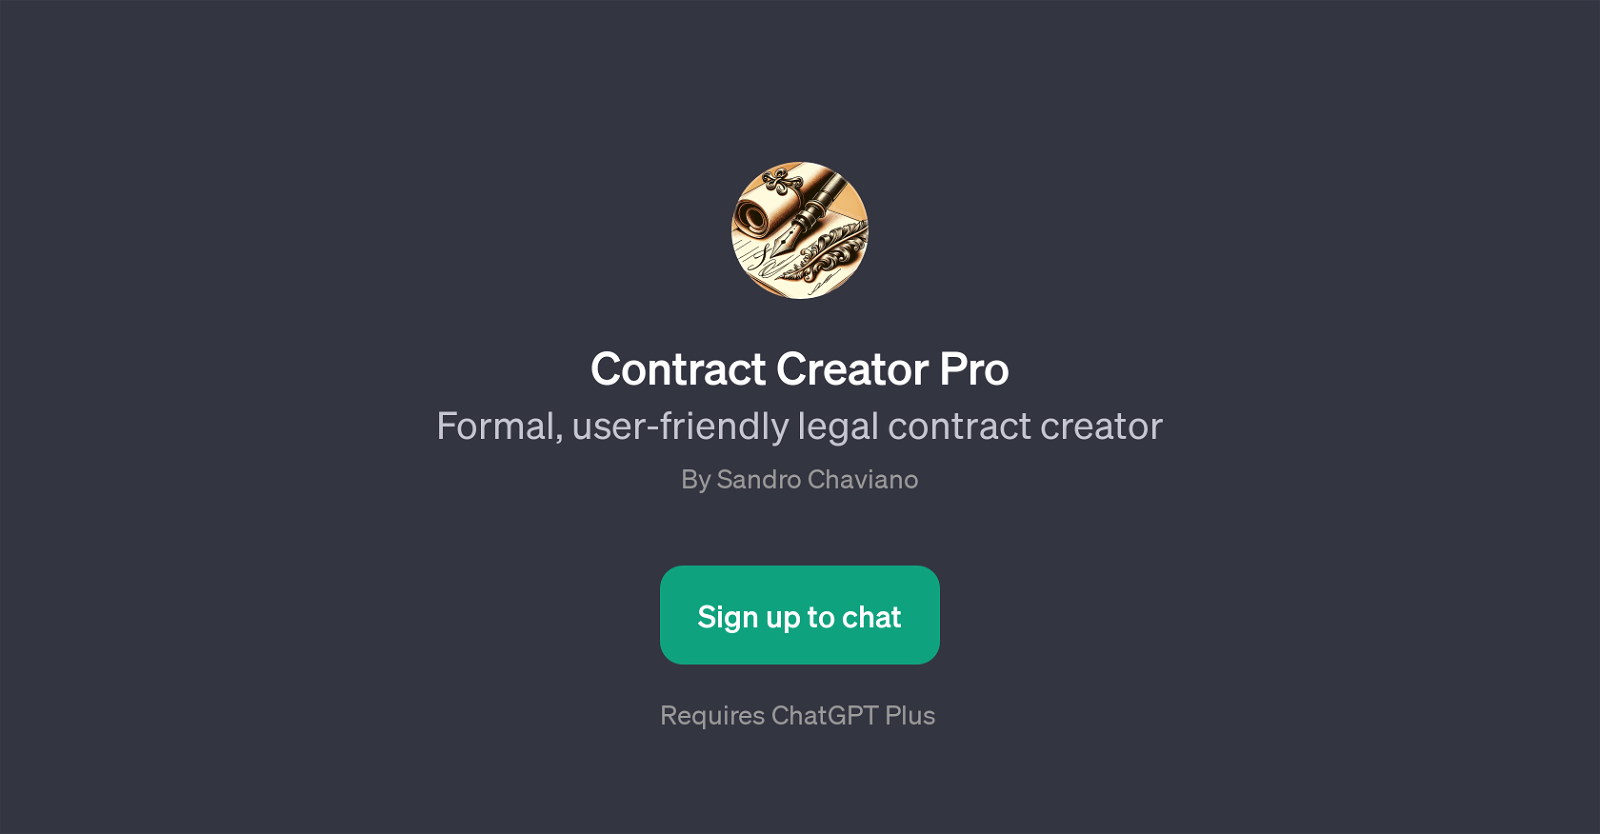 Contract Creator Pro website